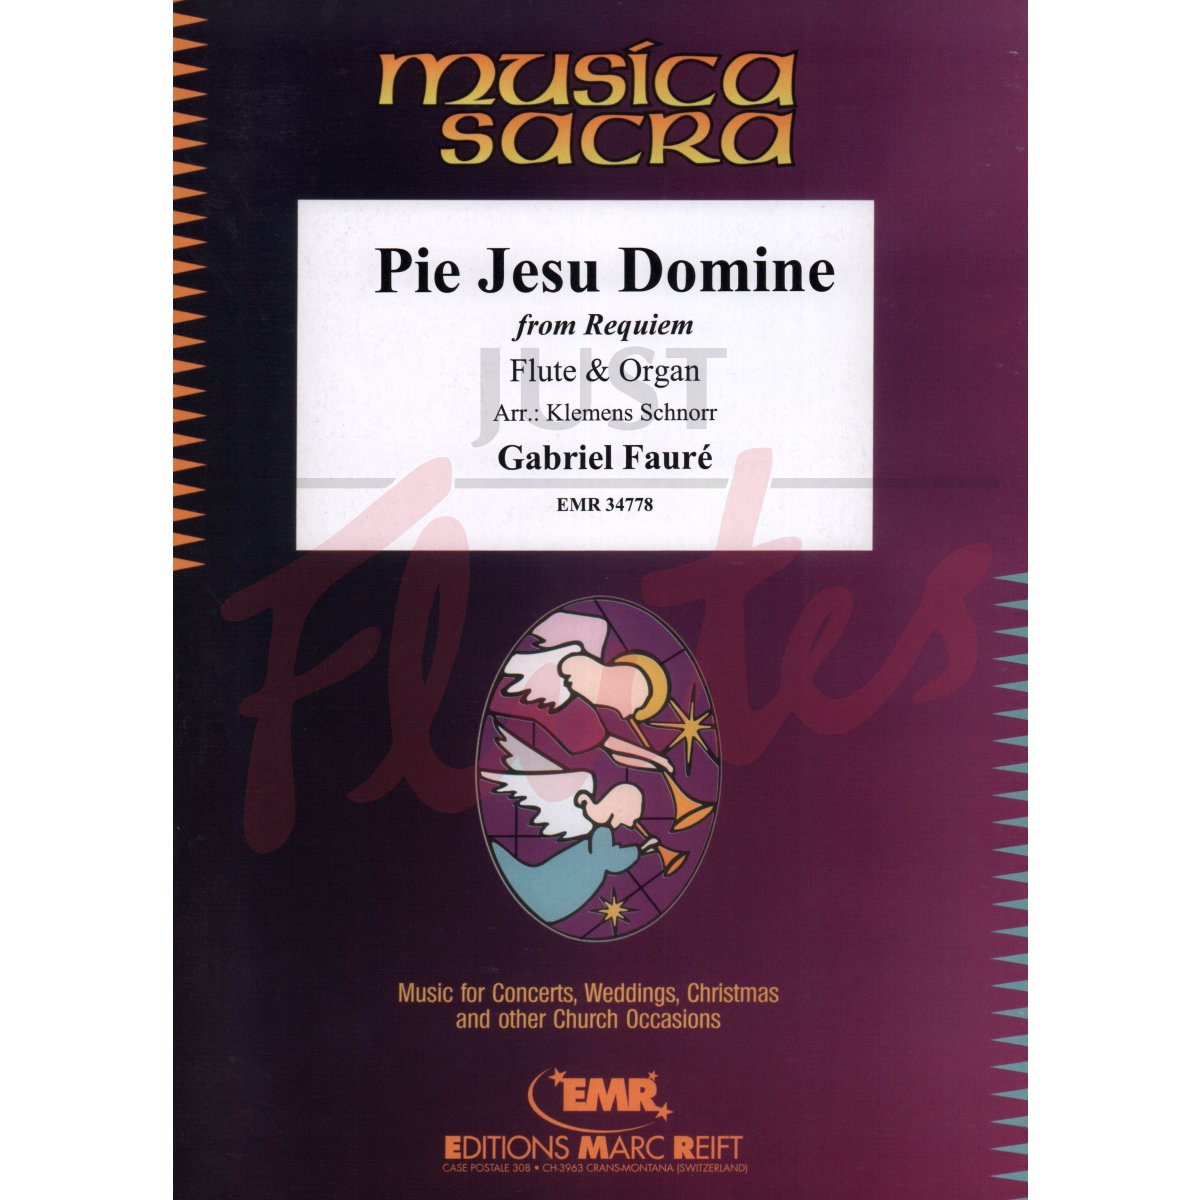 Pie Jesu Domine from Requiem for Flute and Organ